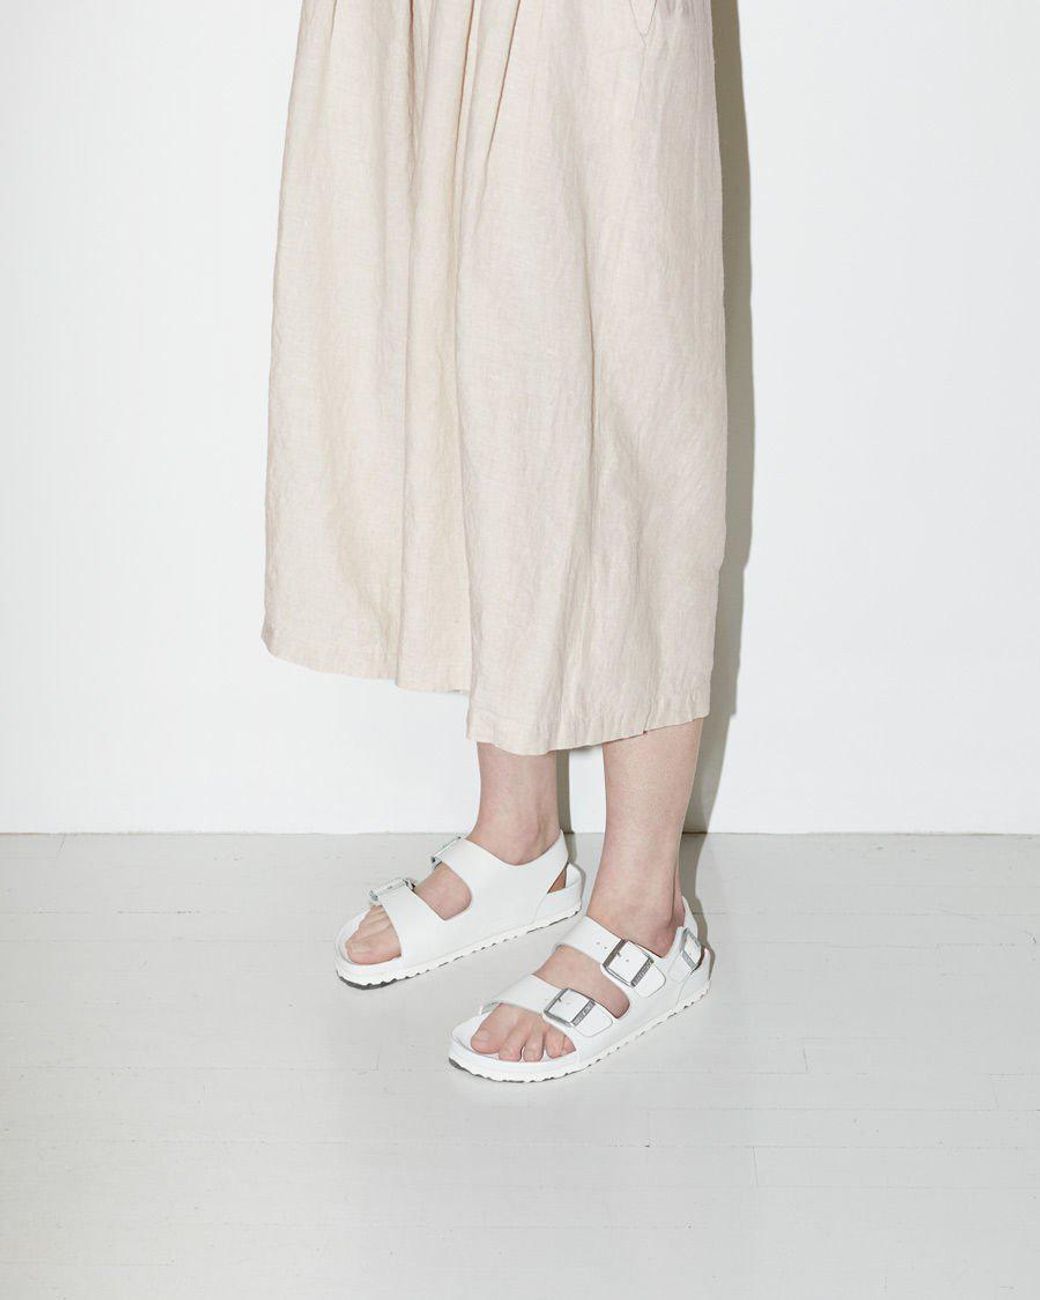 Birkenstock Milano Exquisite Leather Sandals in White | Lyst